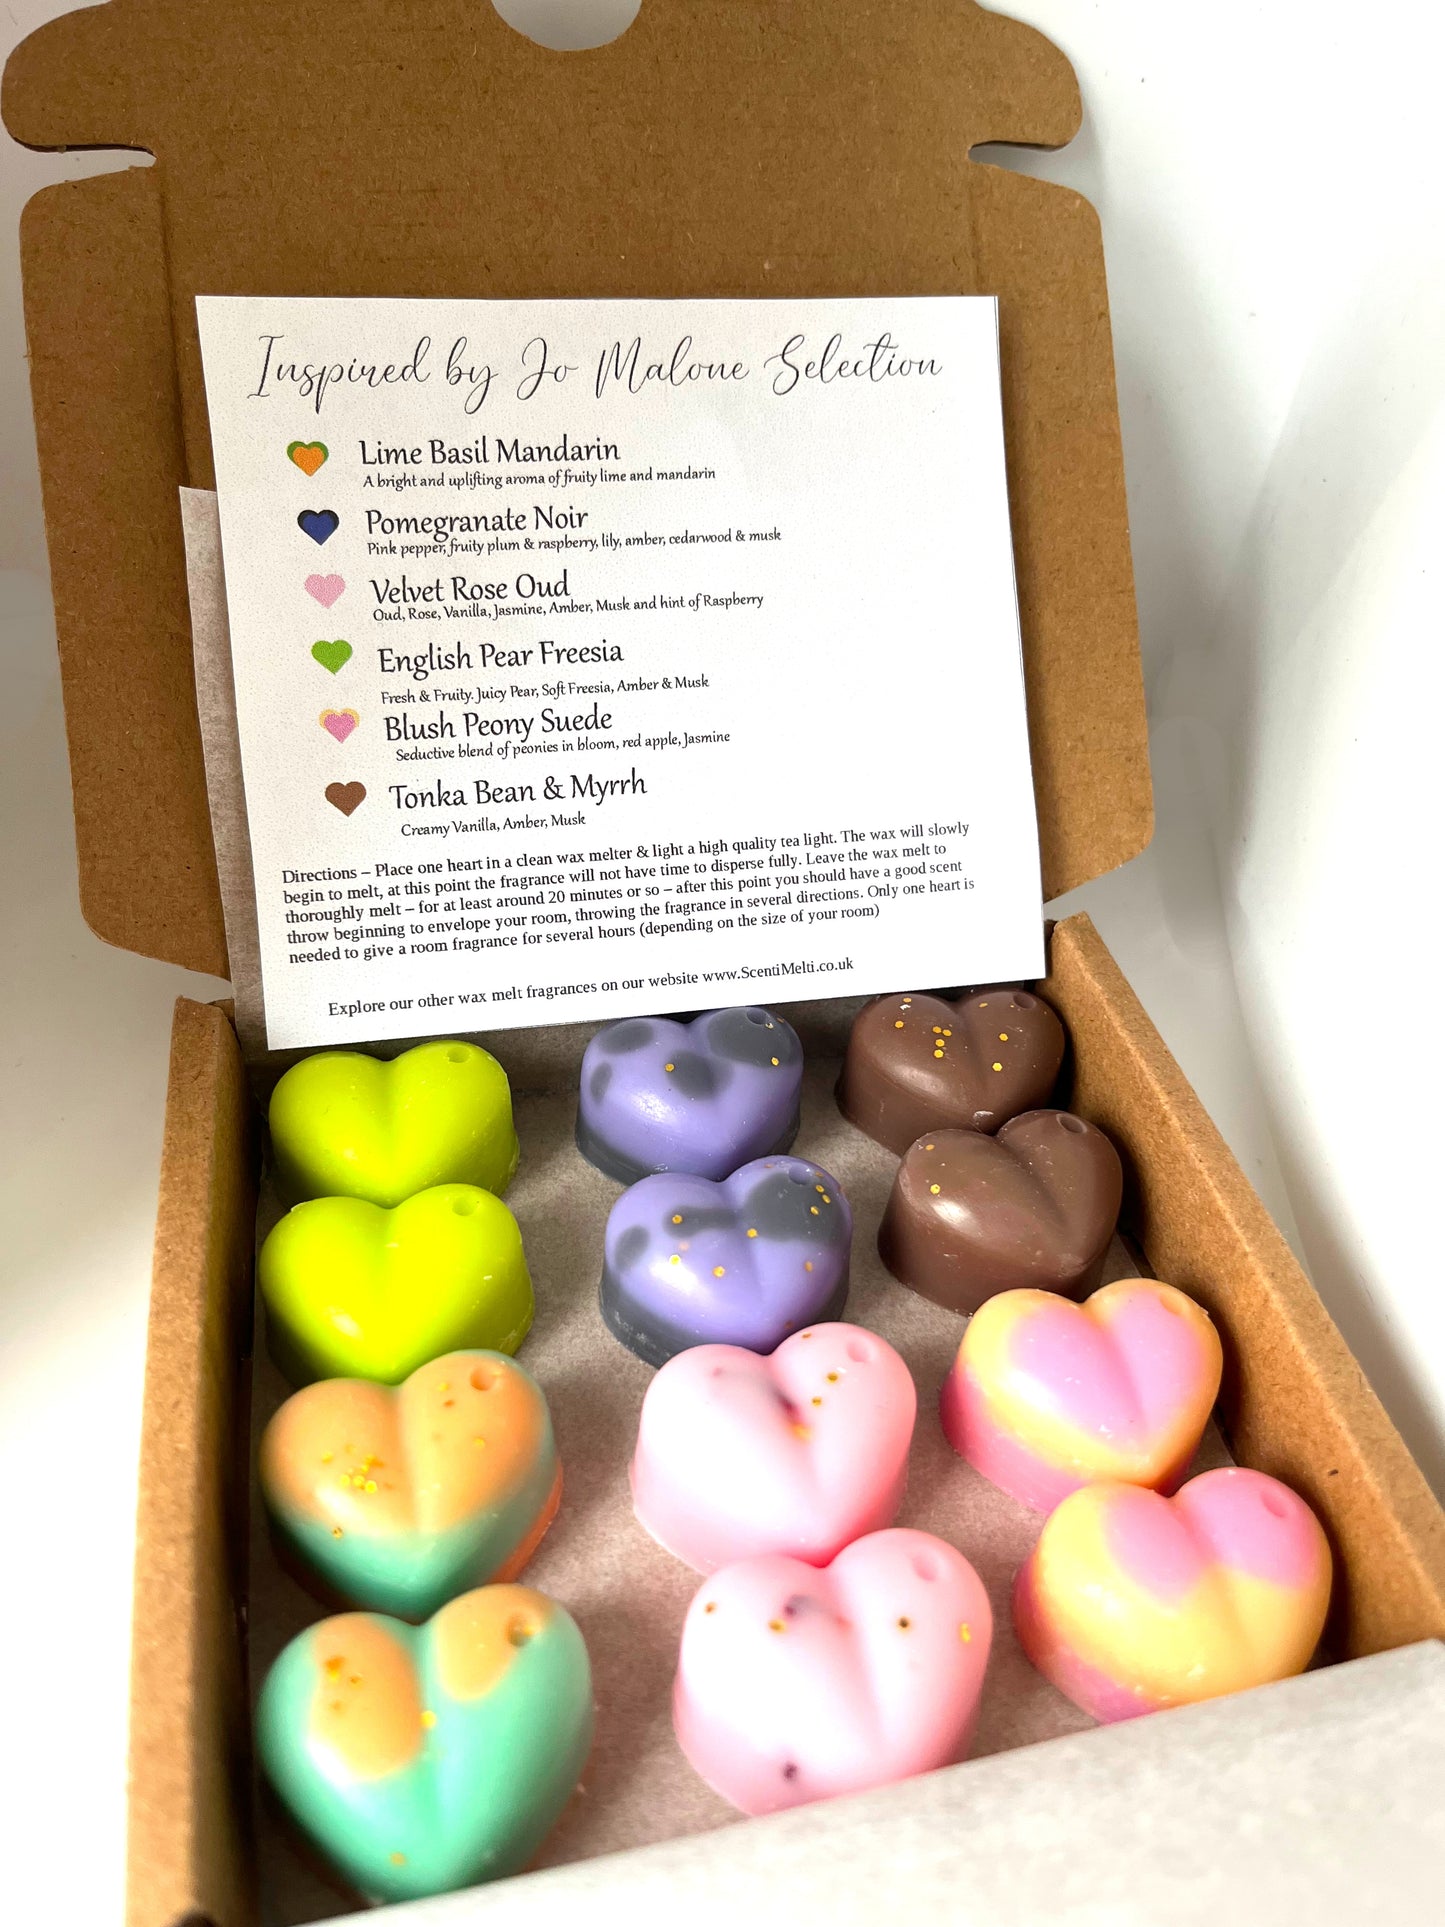 12 Heart Mixed Box of Hearts Gift Set | JM Inspired - ScentiMelti Wax Melts